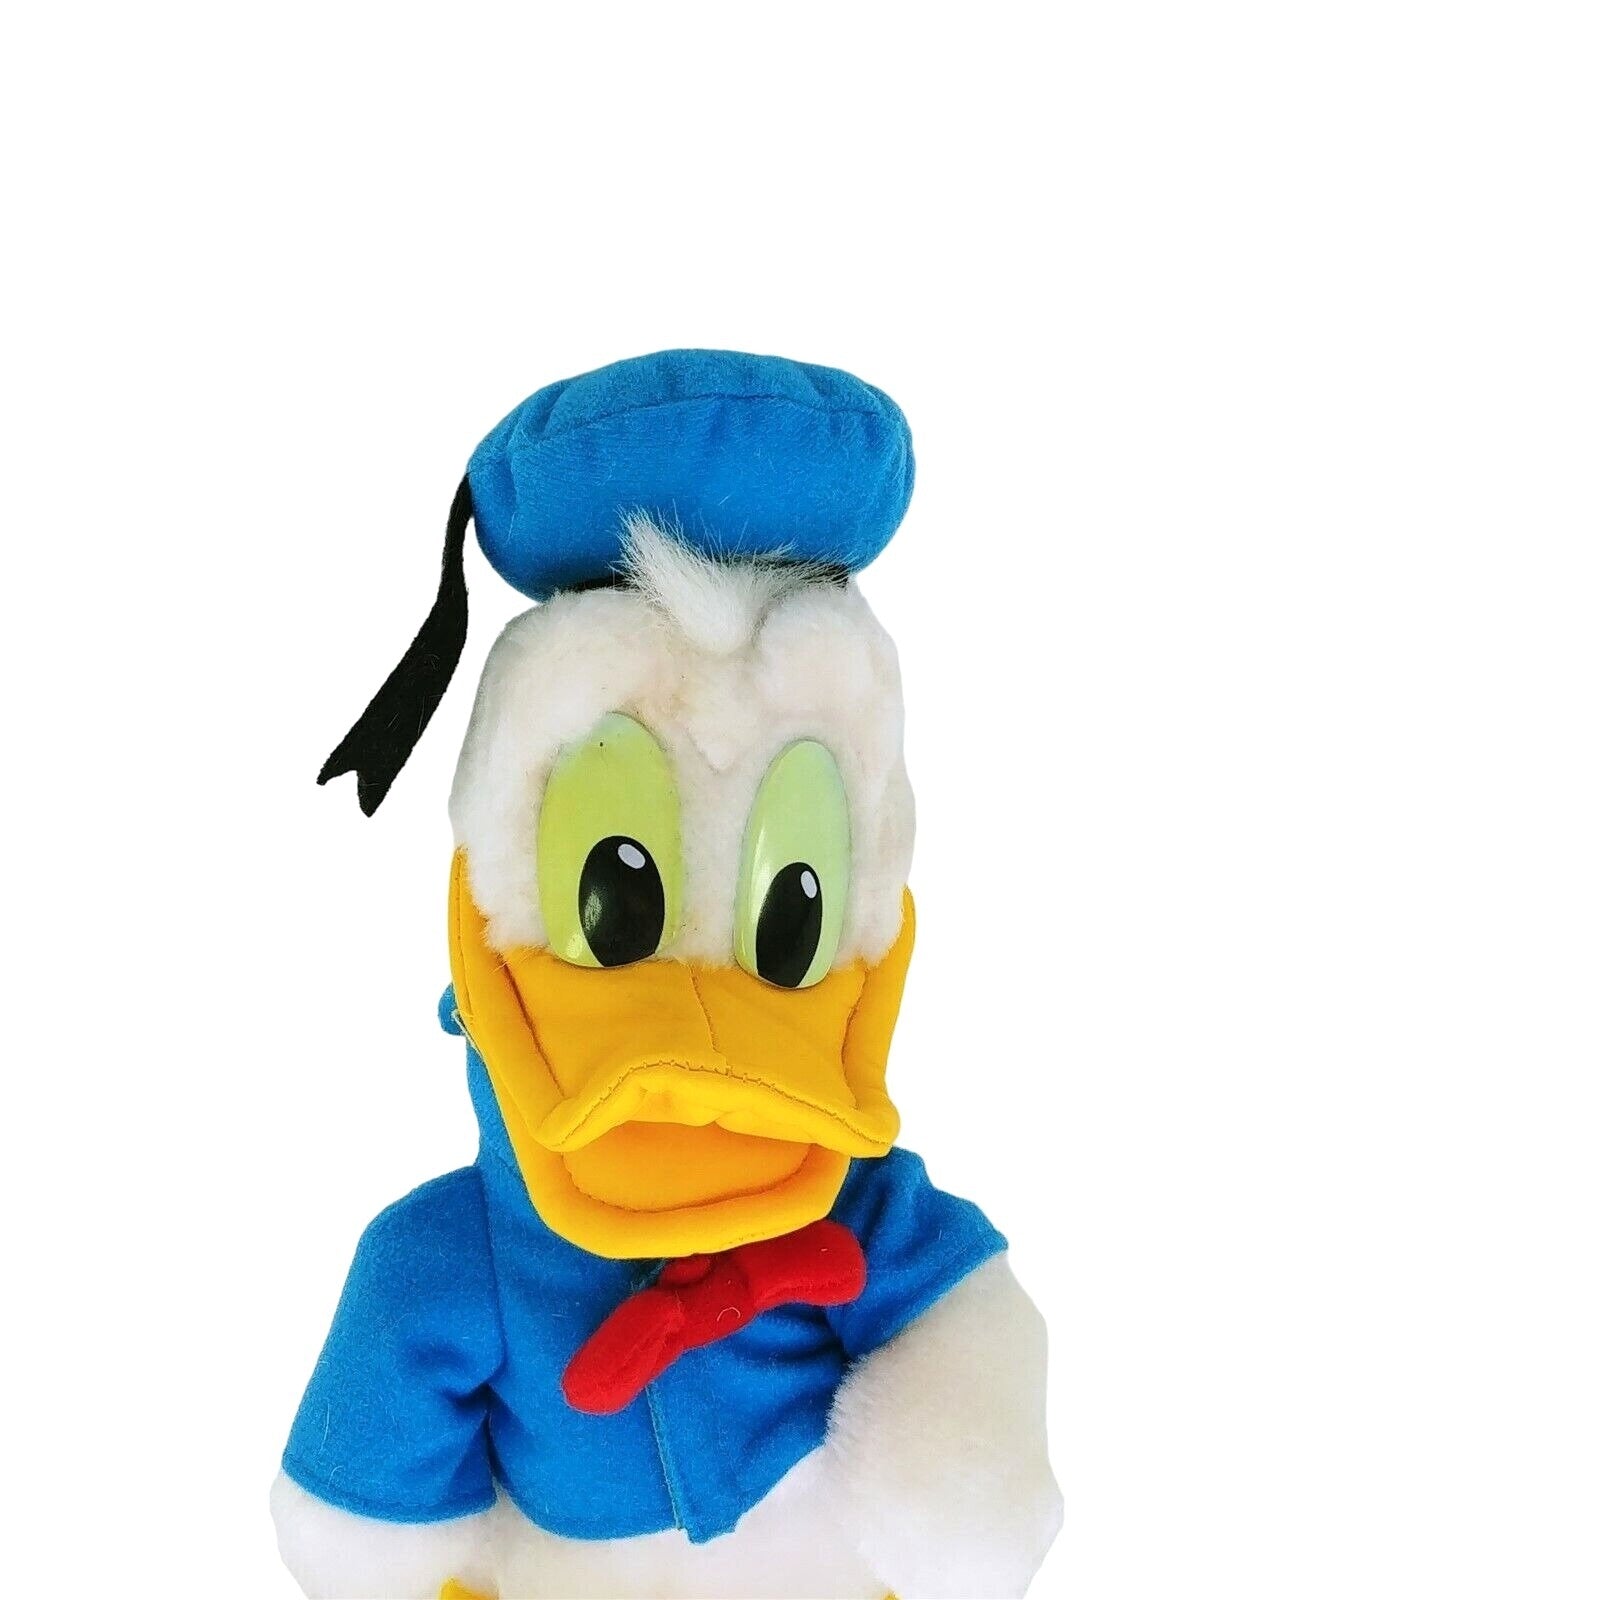 Donald Duck Sailor Plush Toy Stuffed Animal Disney Collectible Original Tag